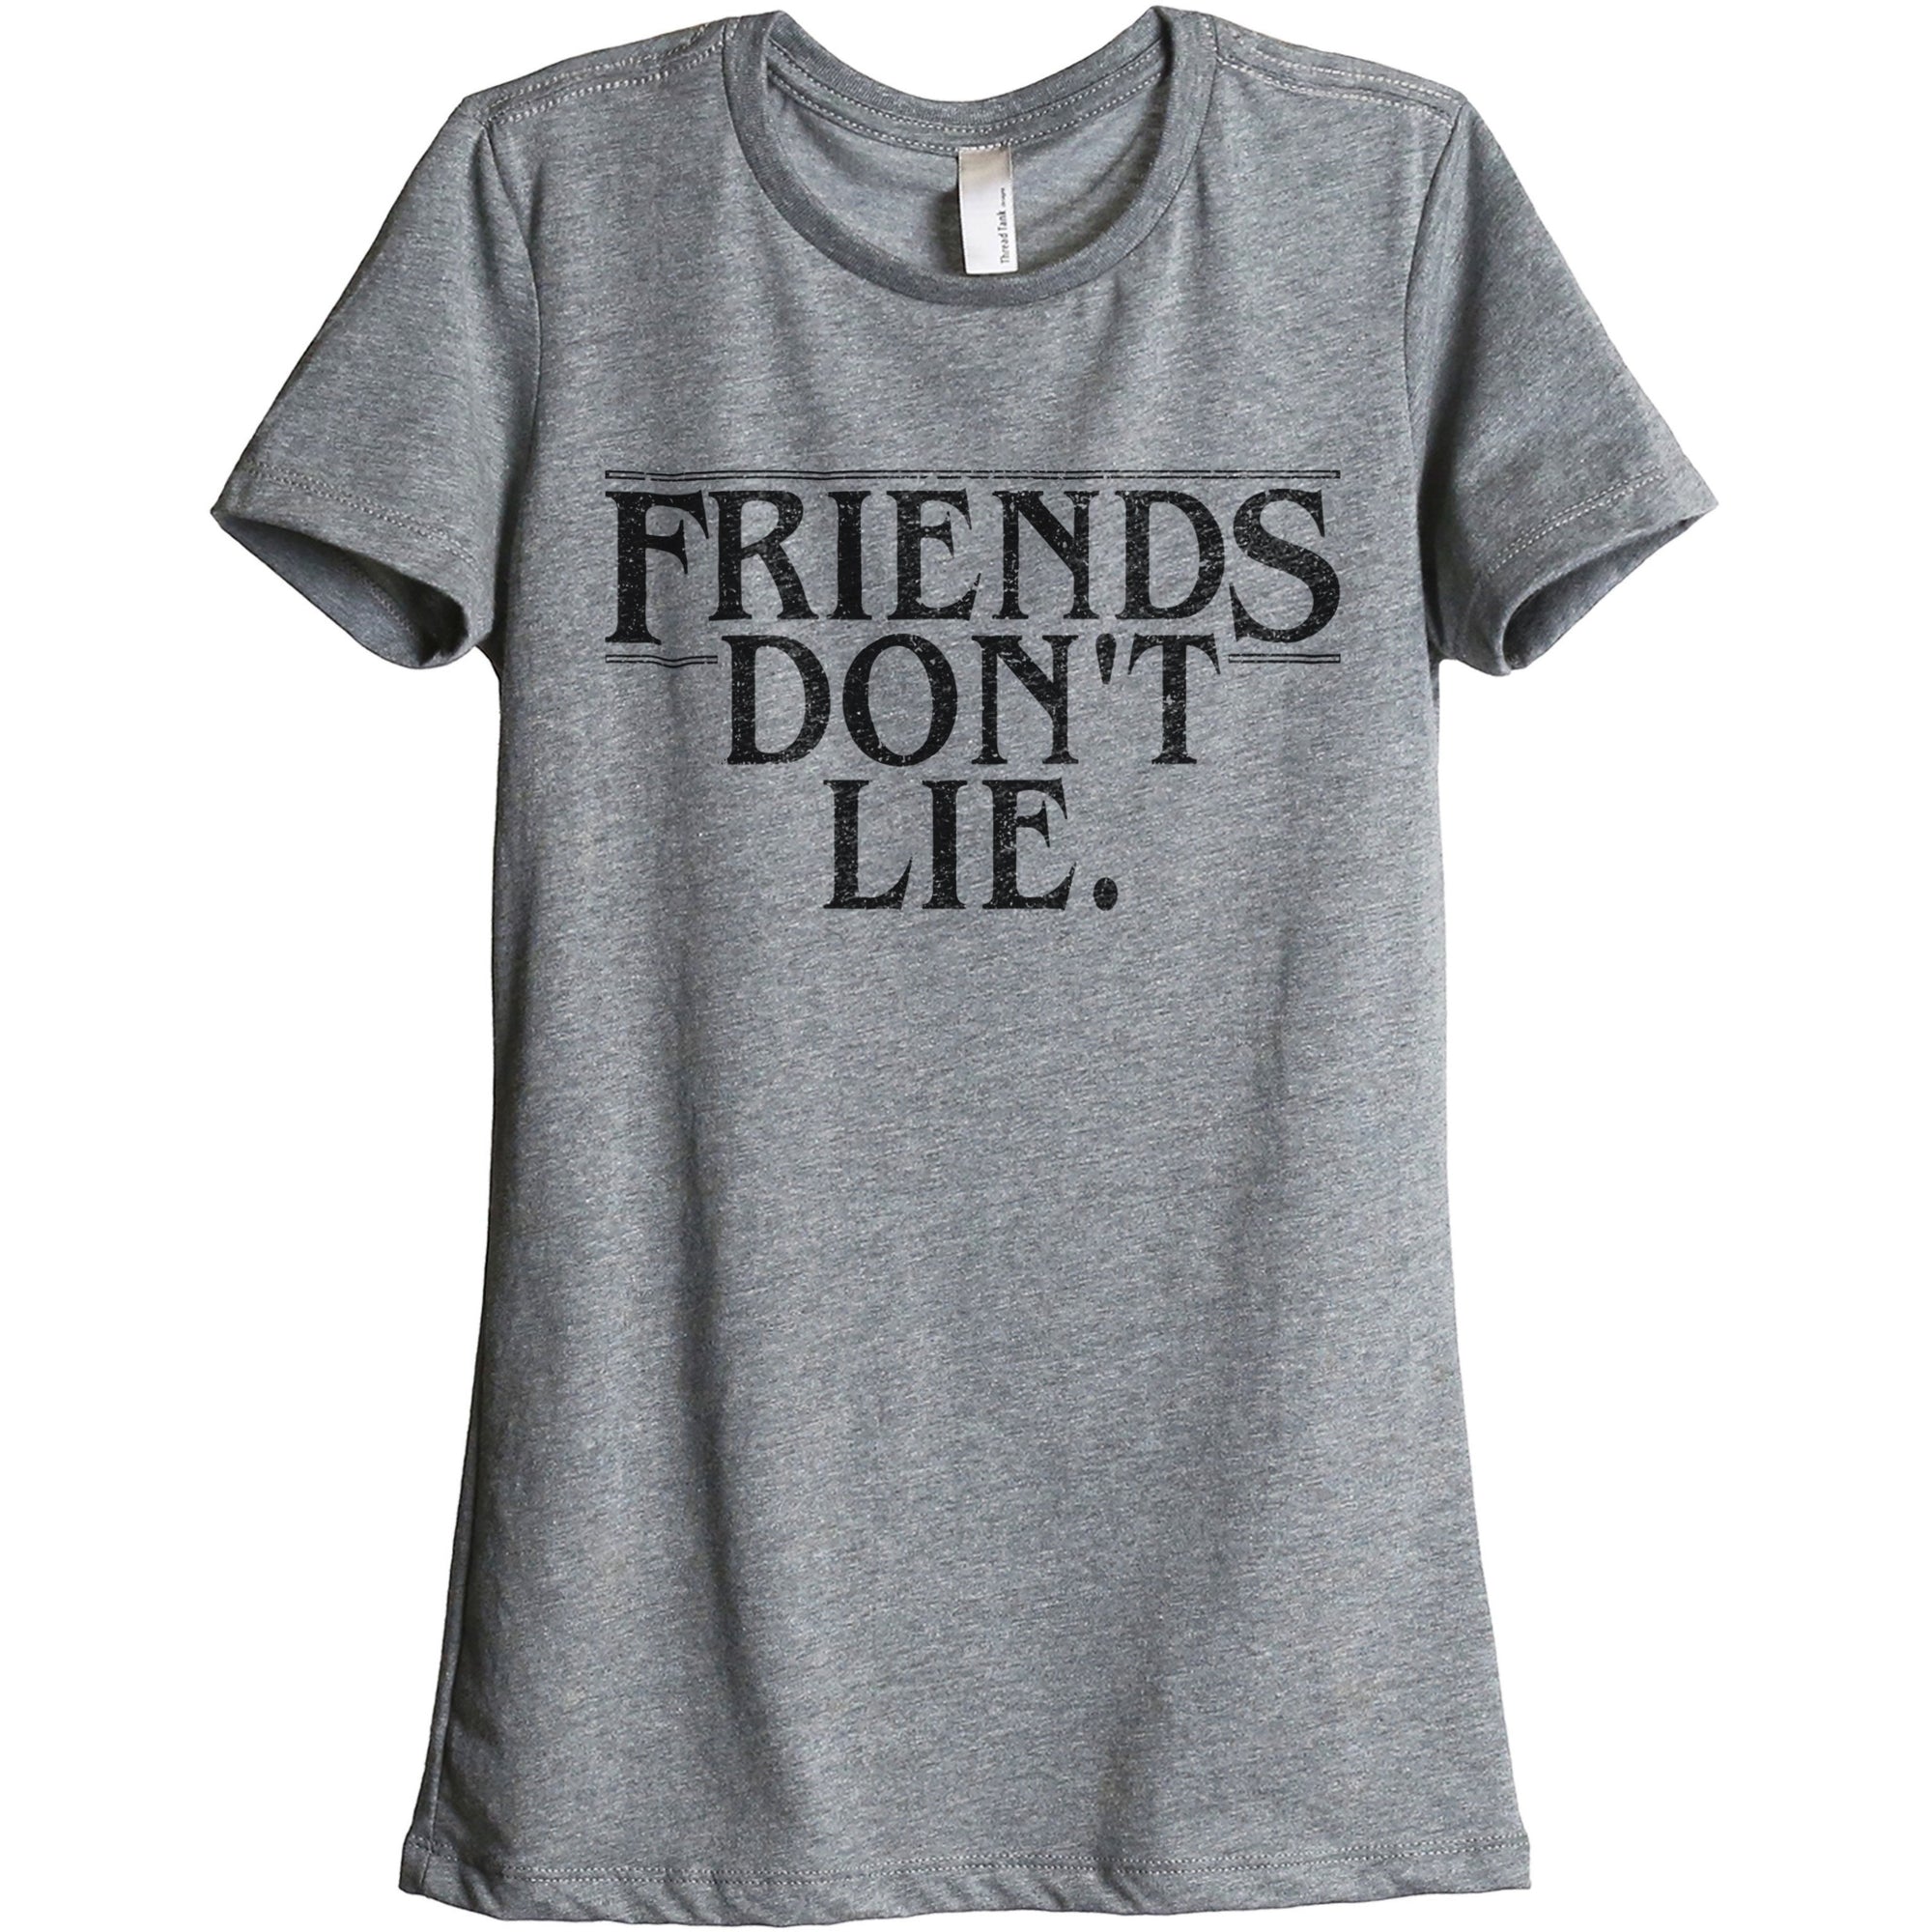 Friends Don't Lie - thread tank | Stories you can wear.